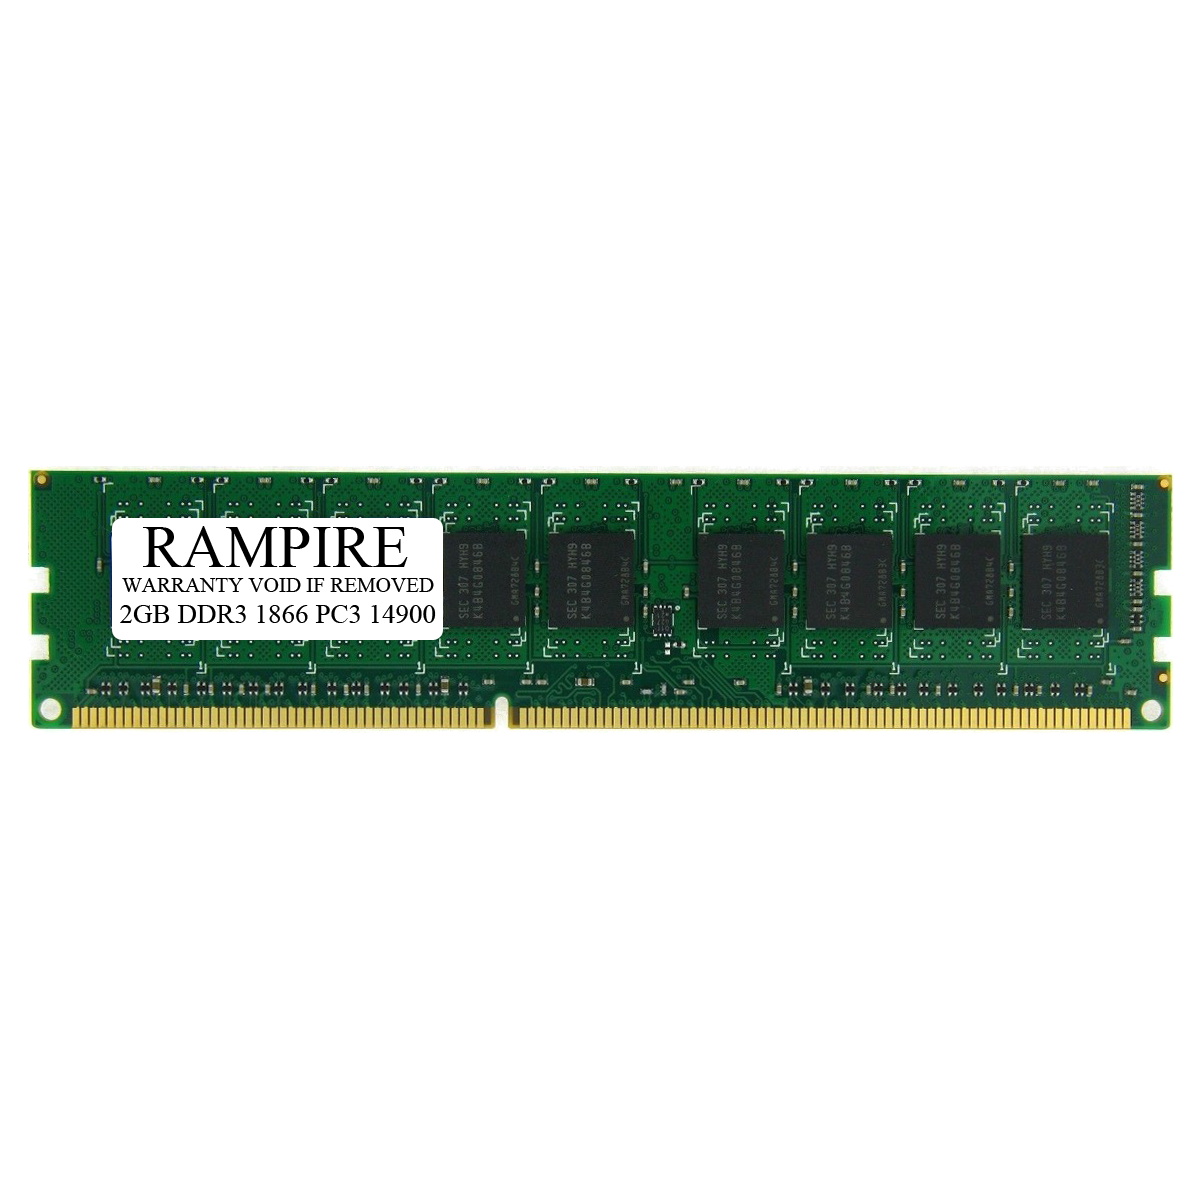 RAMPIRE 2GB DDR3 1866 (PC3 14900) 240-Pin SDRAM 1Rx8 Standard Profile 1.5V ECC Unregistered Server Memory